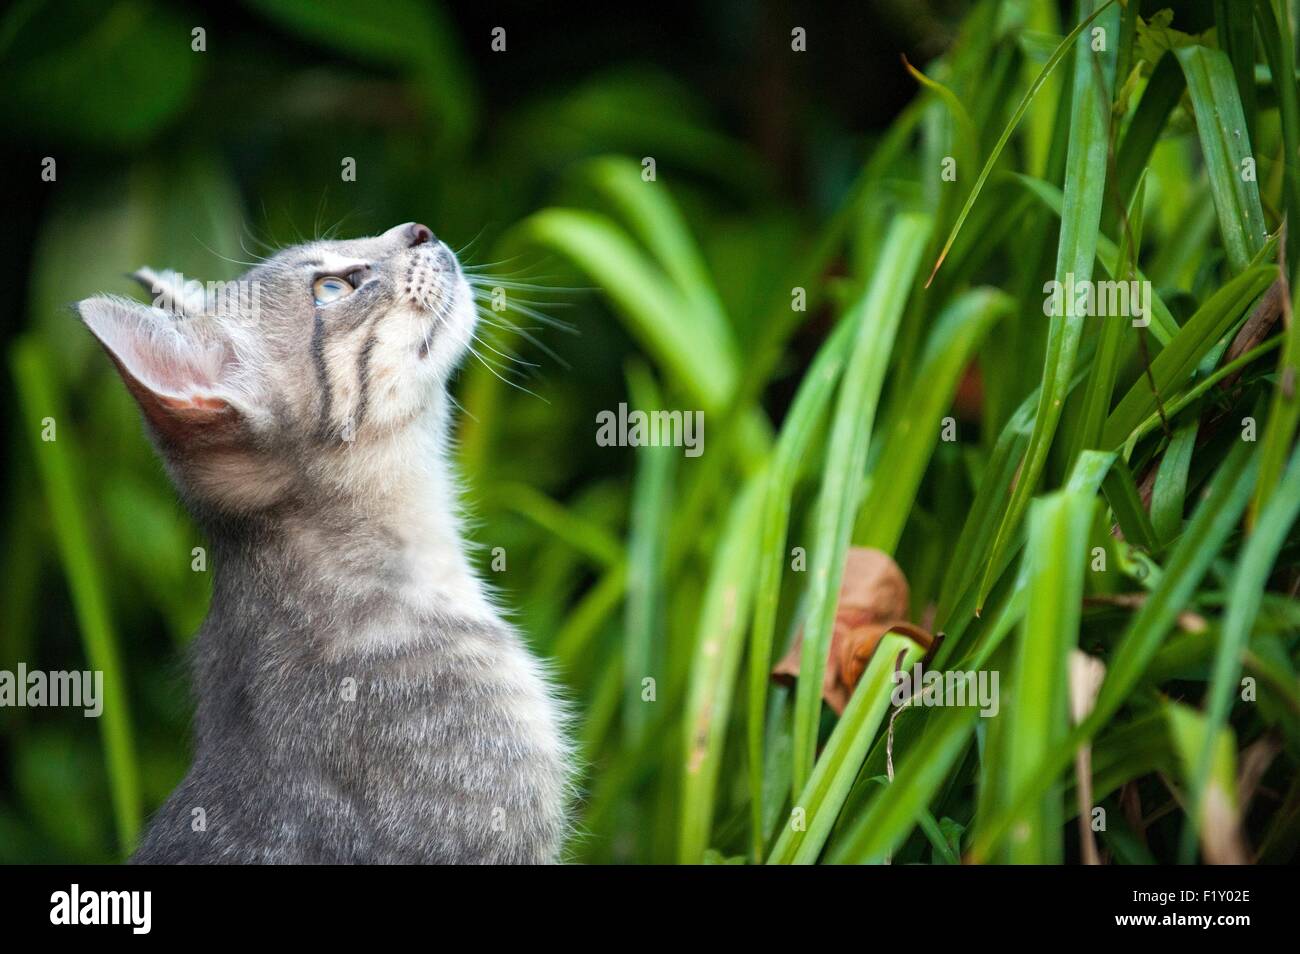 France, Isere, domestic tabby cat (Felis silvestris catus), 3 months Stock Photo